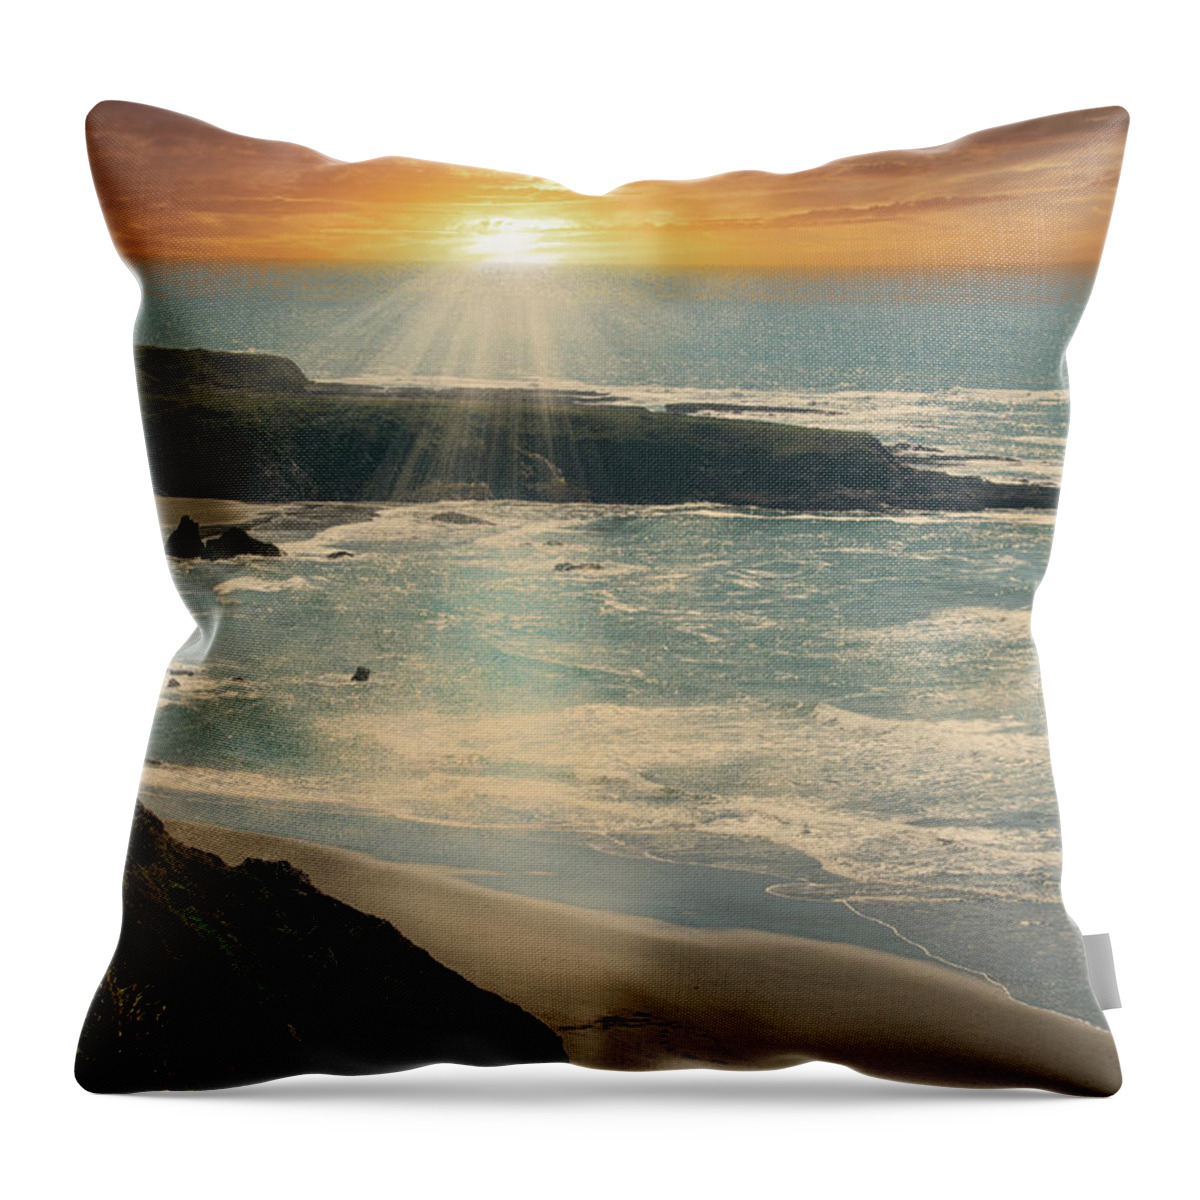 Isolation Beach At Sunset Throw Pillow featuring the photograph Isolation Beach At Sunset by Frank Wilson